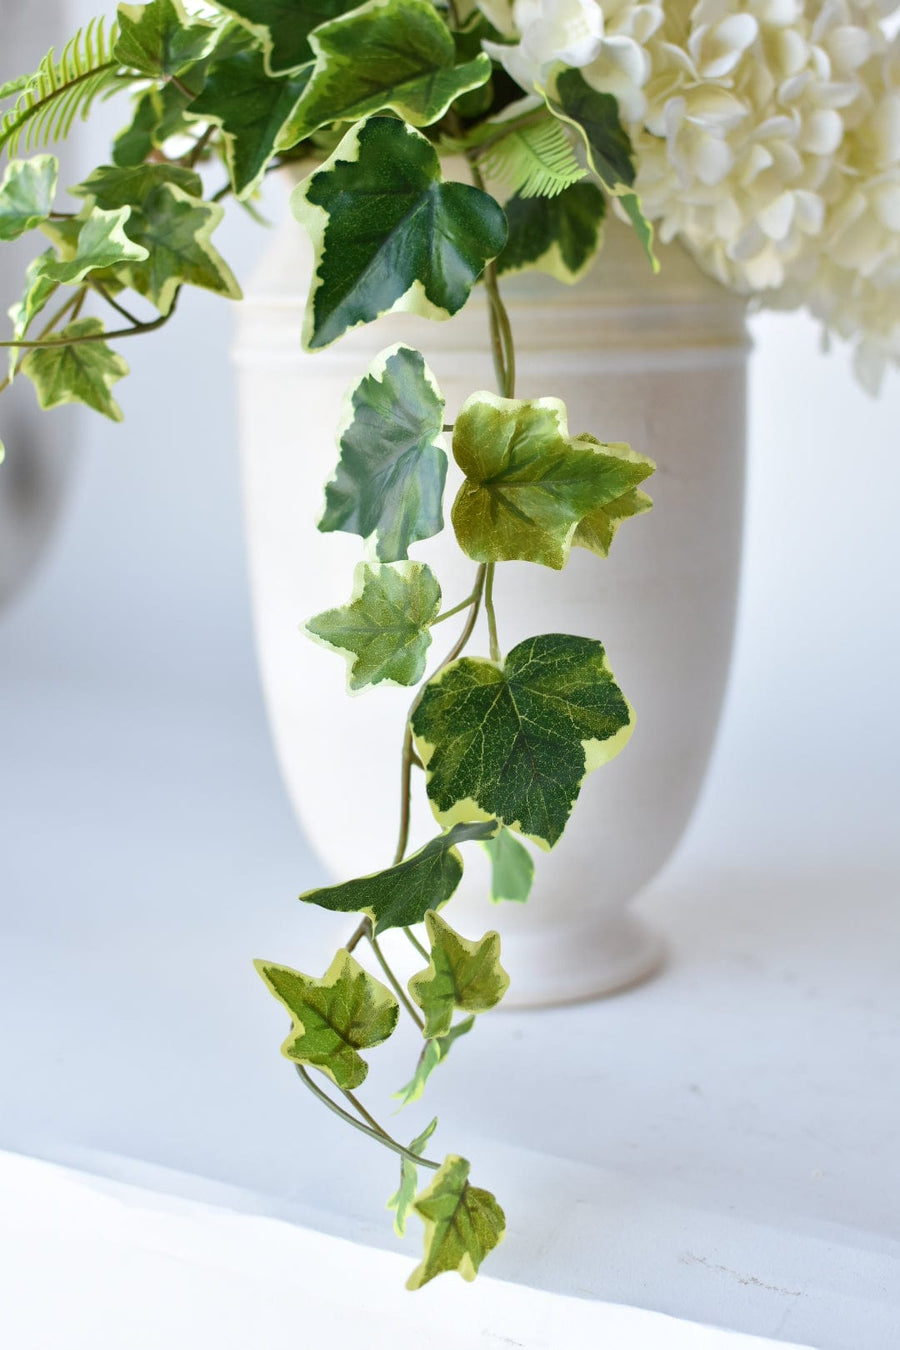 White Hydrangea, Ivy, Sycamore+ More Drop-In Bouquet Arrangement